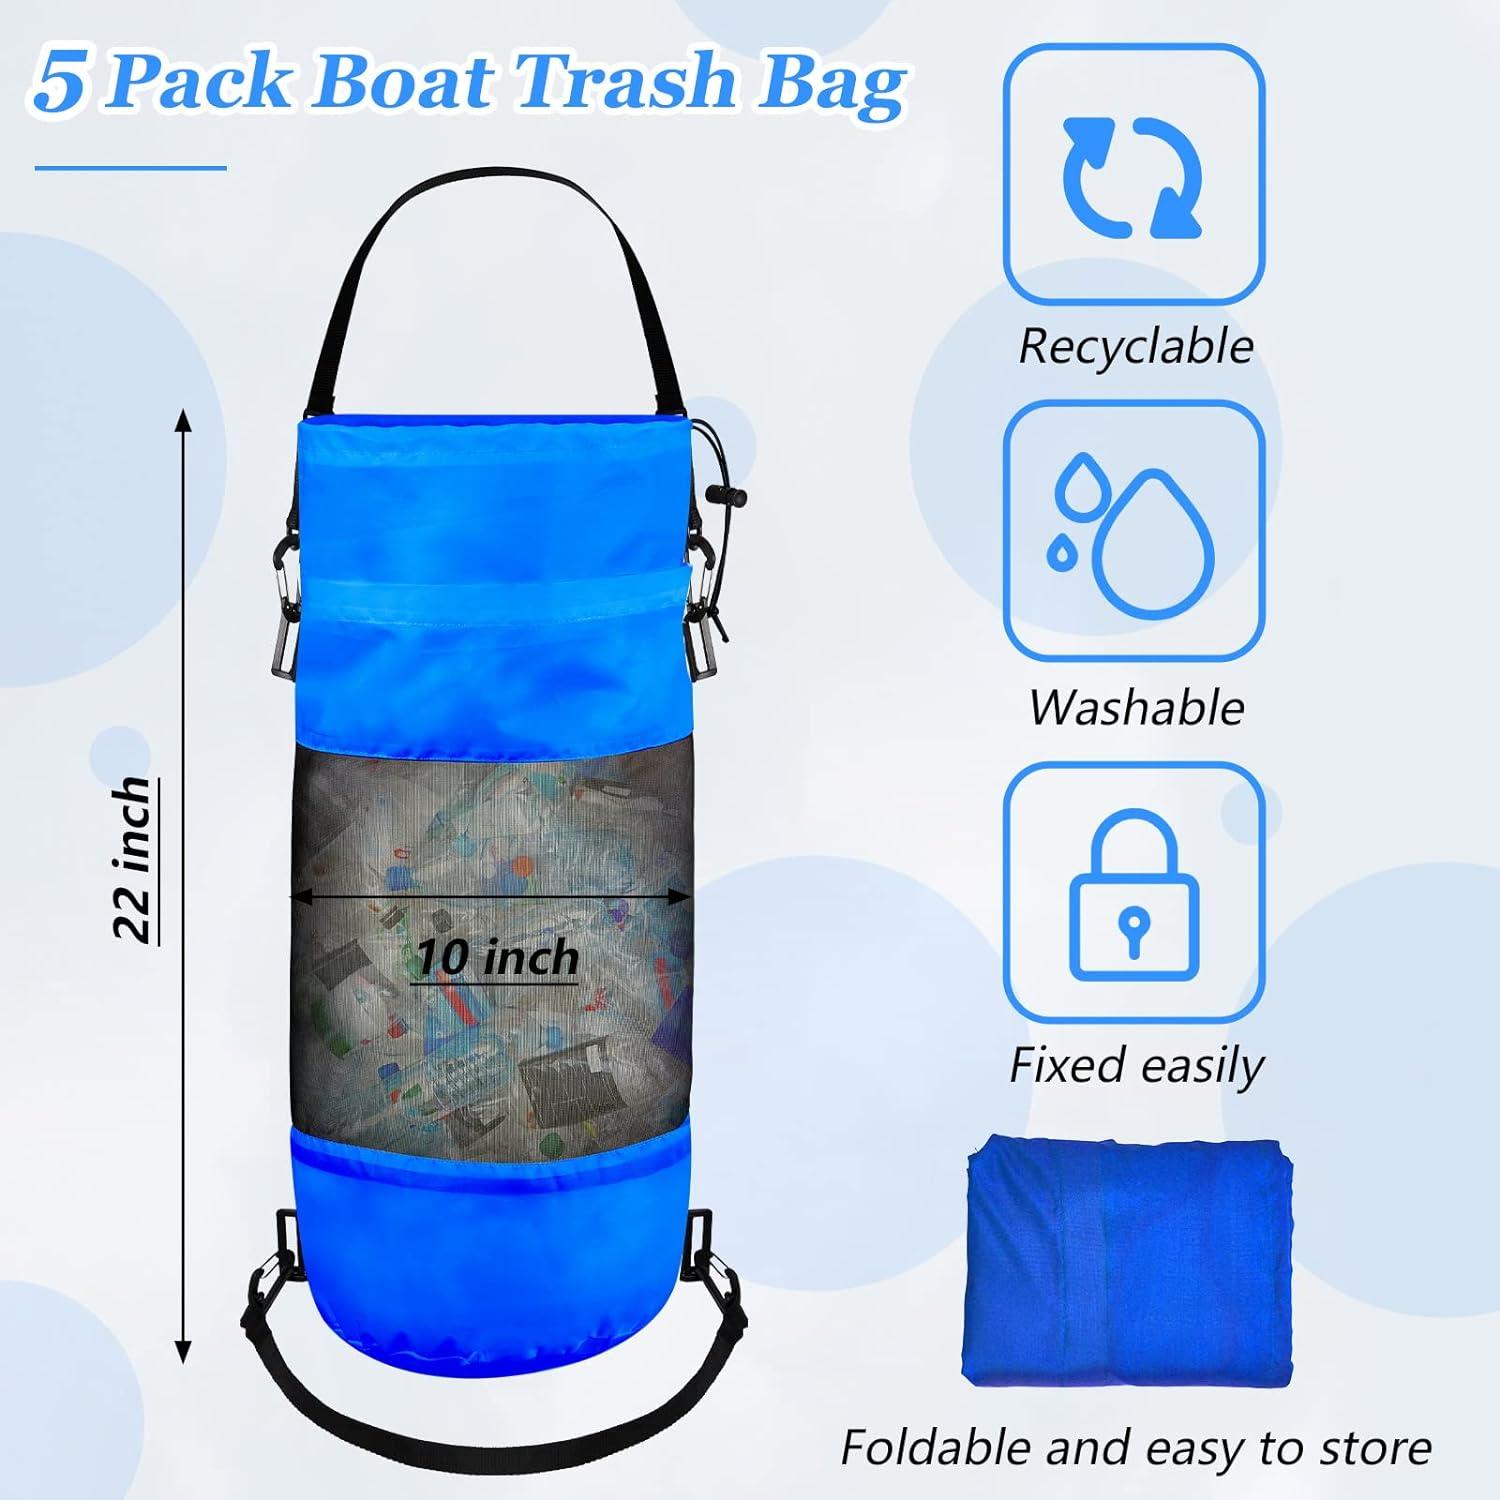 5 Pack Portable Boat Trash Bag Mesh Boat Trash Can Reusable Boat